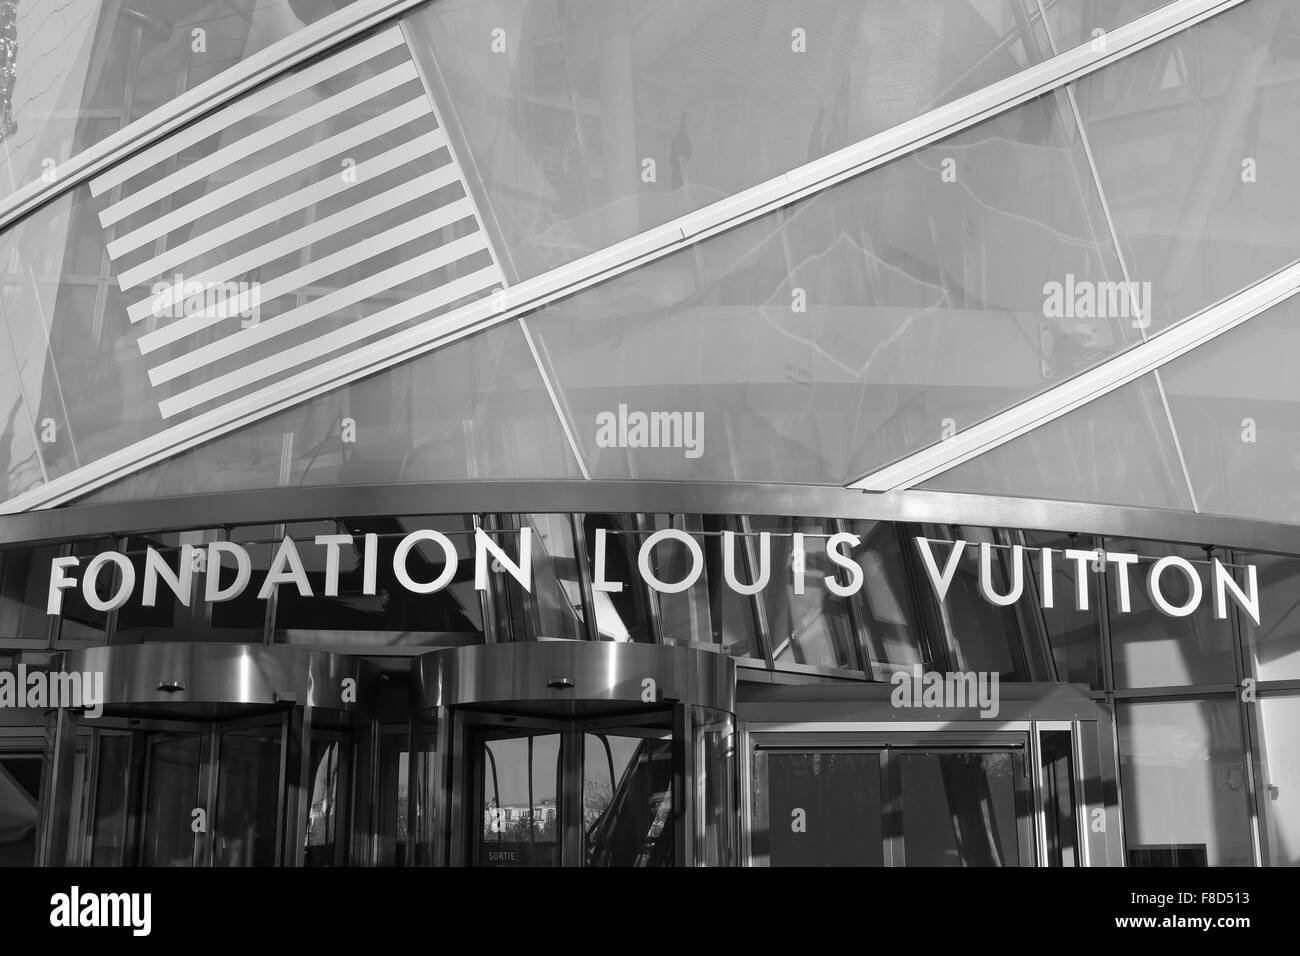 Vuitton logo Black and White Stock Photos & Images - Alamy